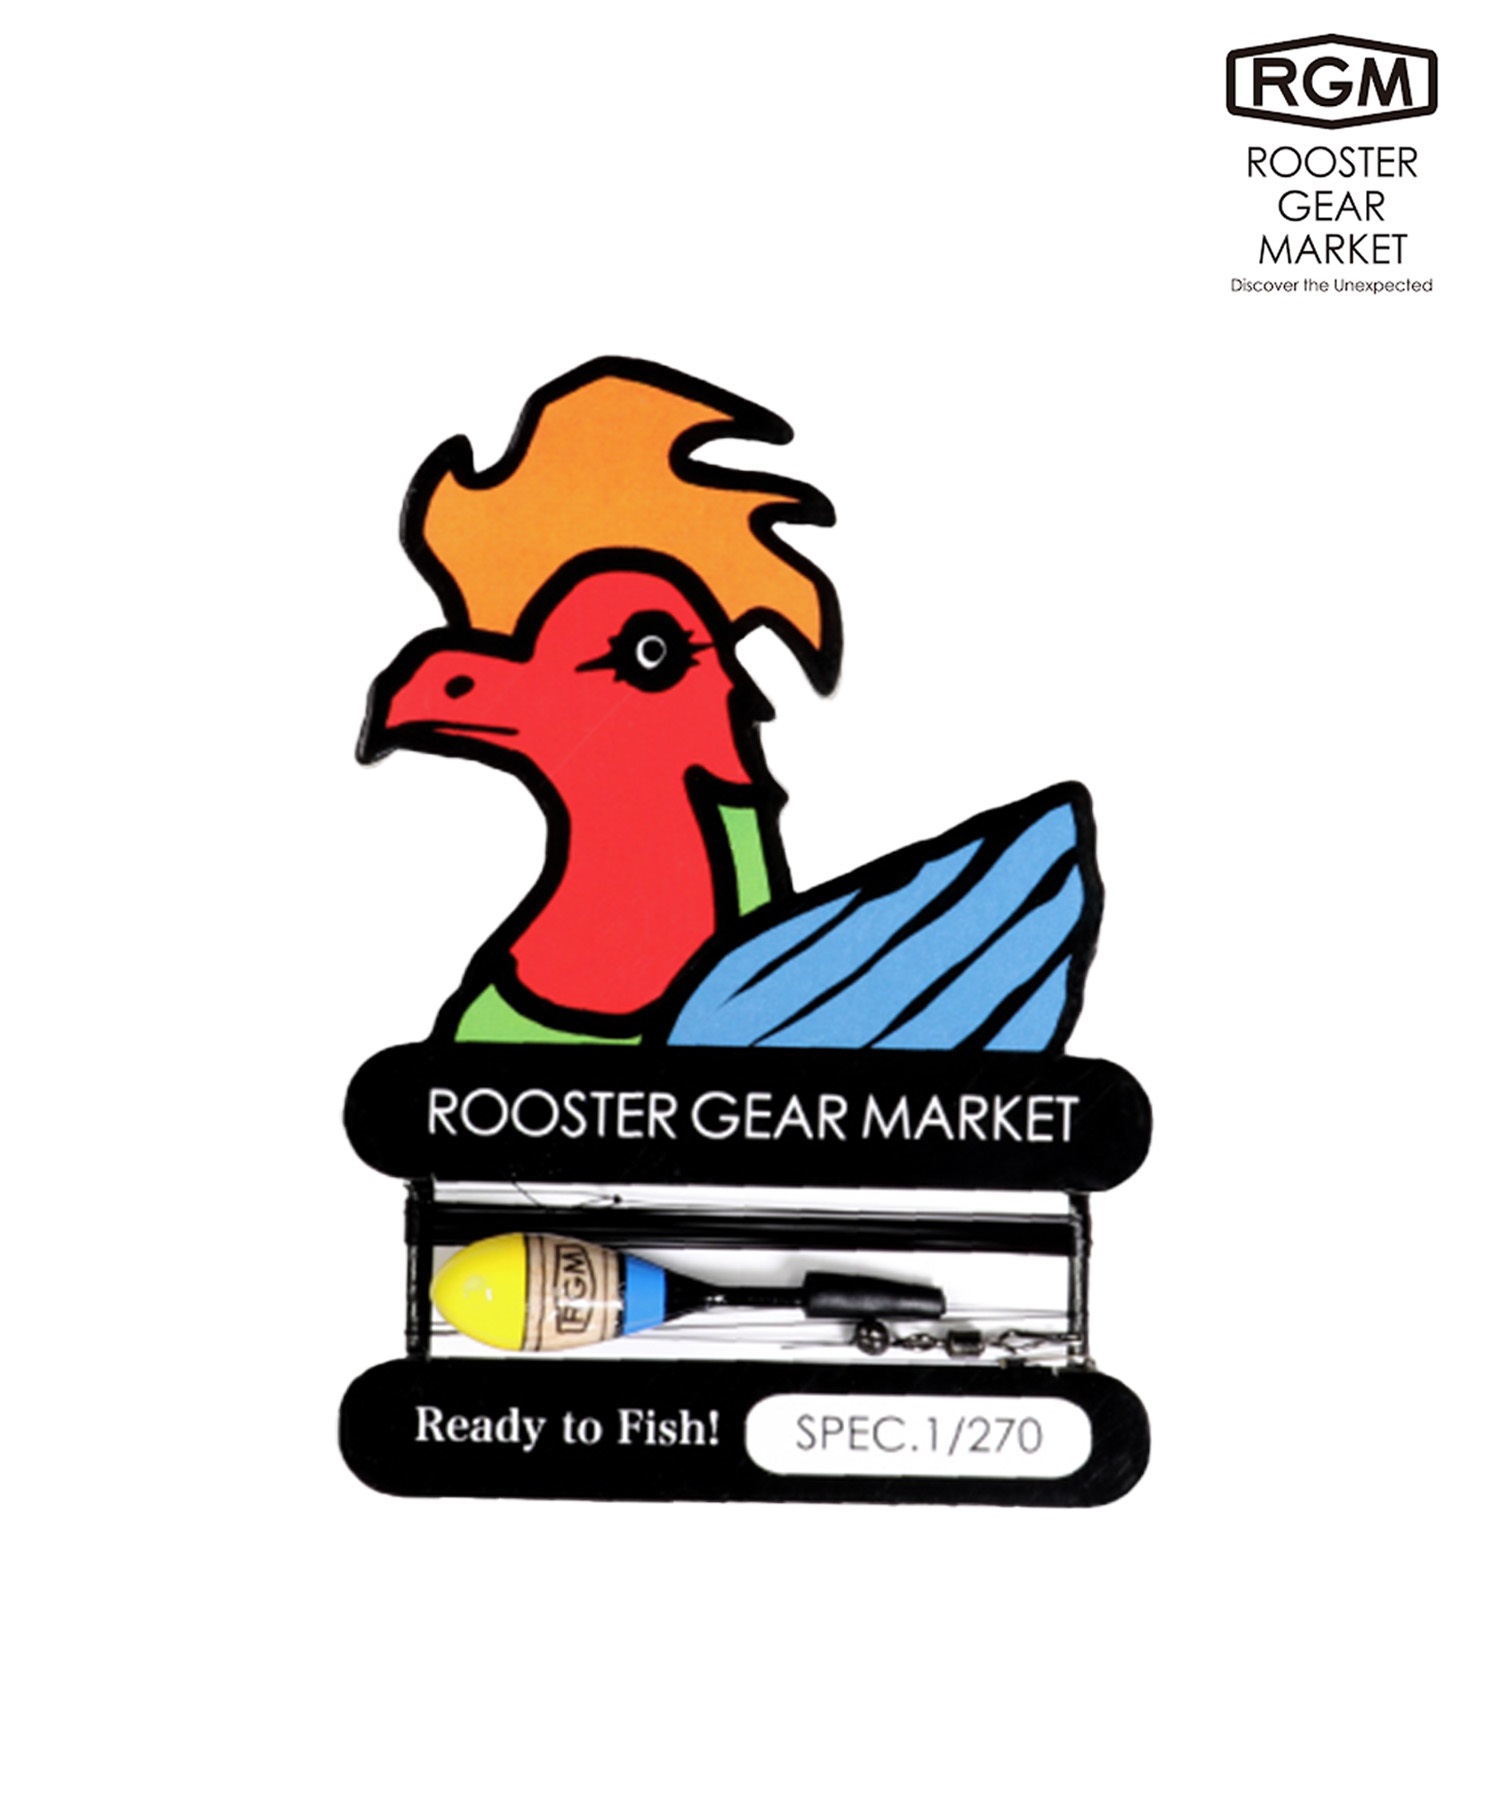 ROOSTER GEAR MARKET ルースターギアマーケット READY TO FISH フィッシング  アウトドア KK G27(ONECOLOR-240)